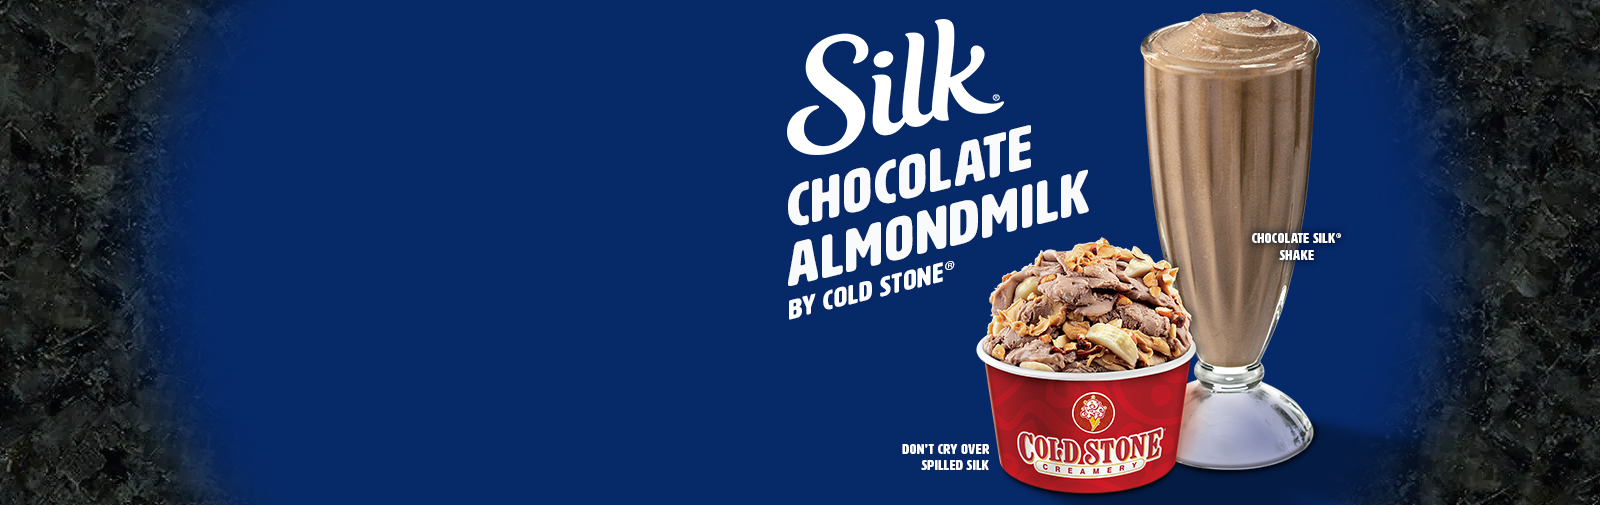 New! Silk® Almondmilk Chocolate Creation by Cold Stone®